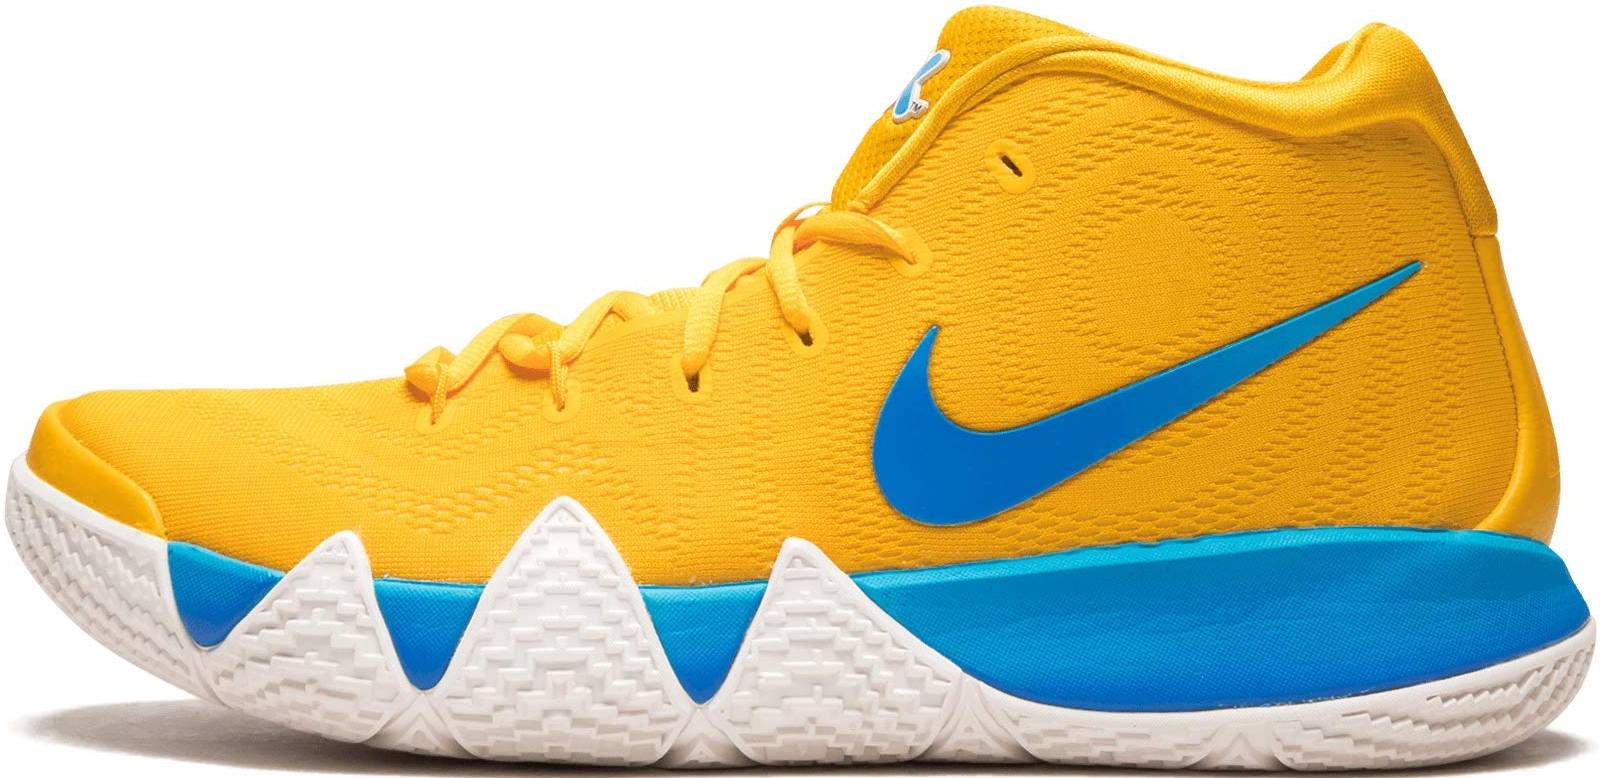 yellow basketball sneakers